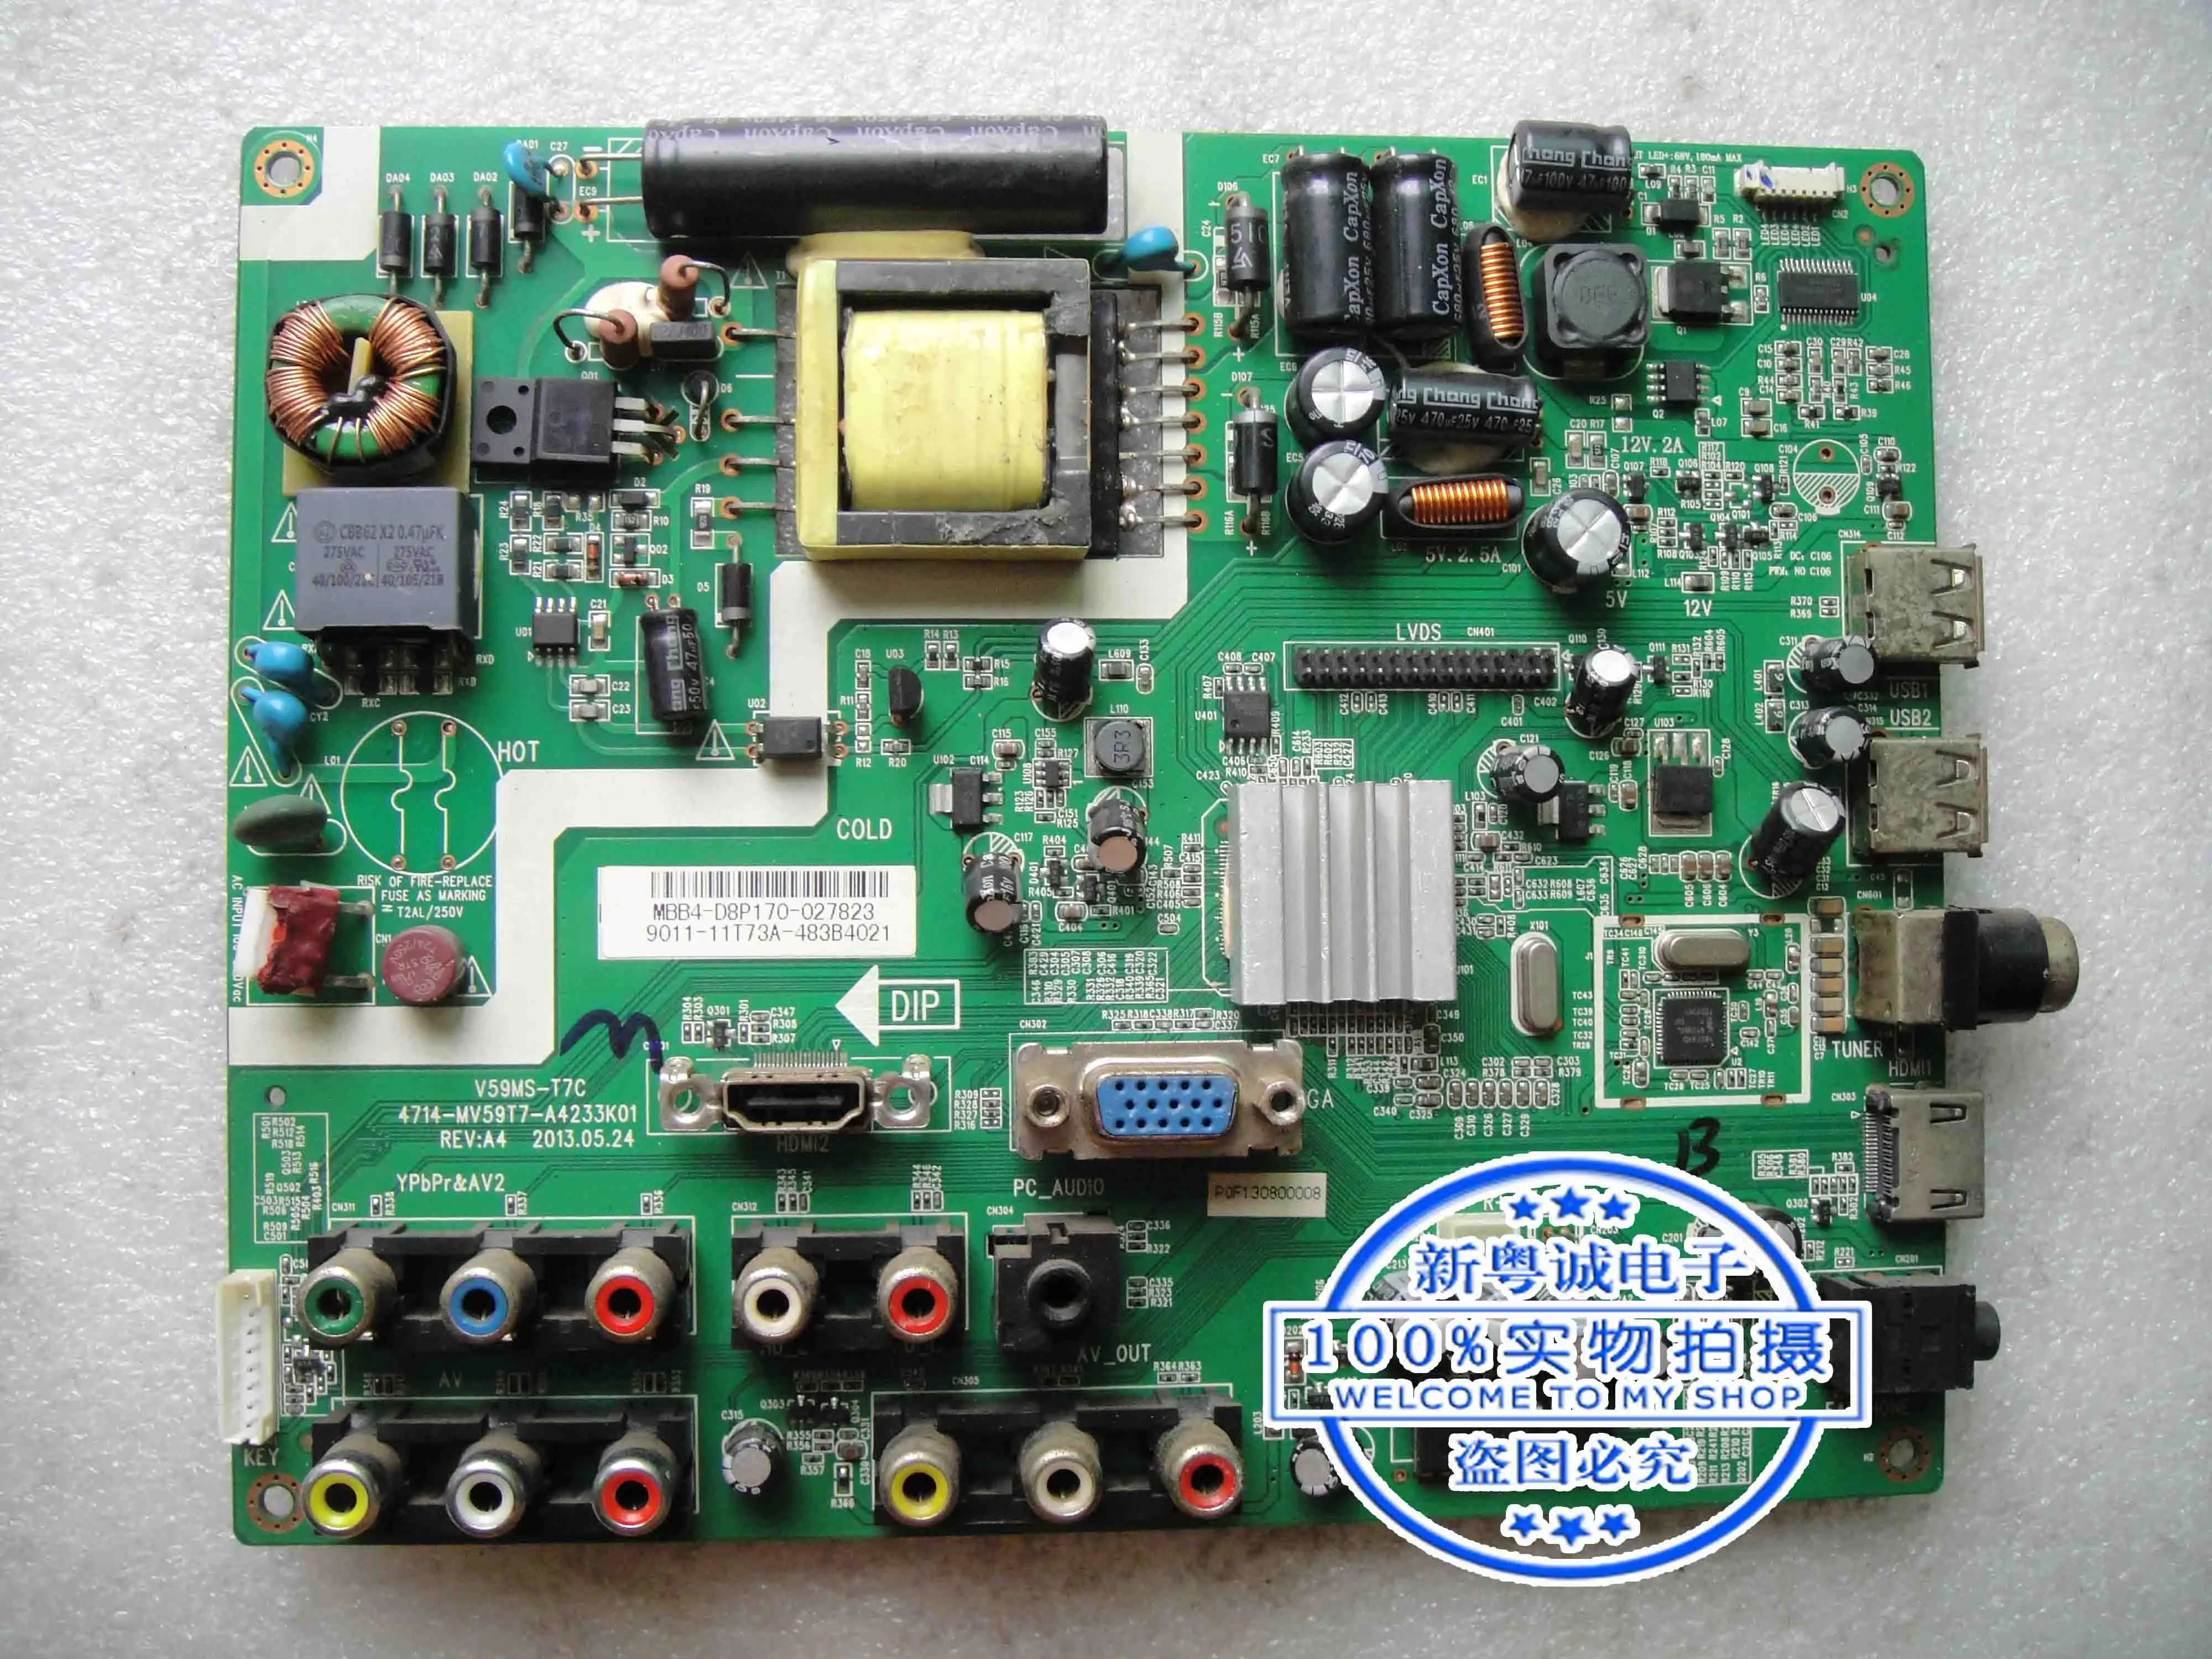 

The original focus LED24C310A motherboard TSUMV59MS-T7C 4714-MV59T7-A2233K01